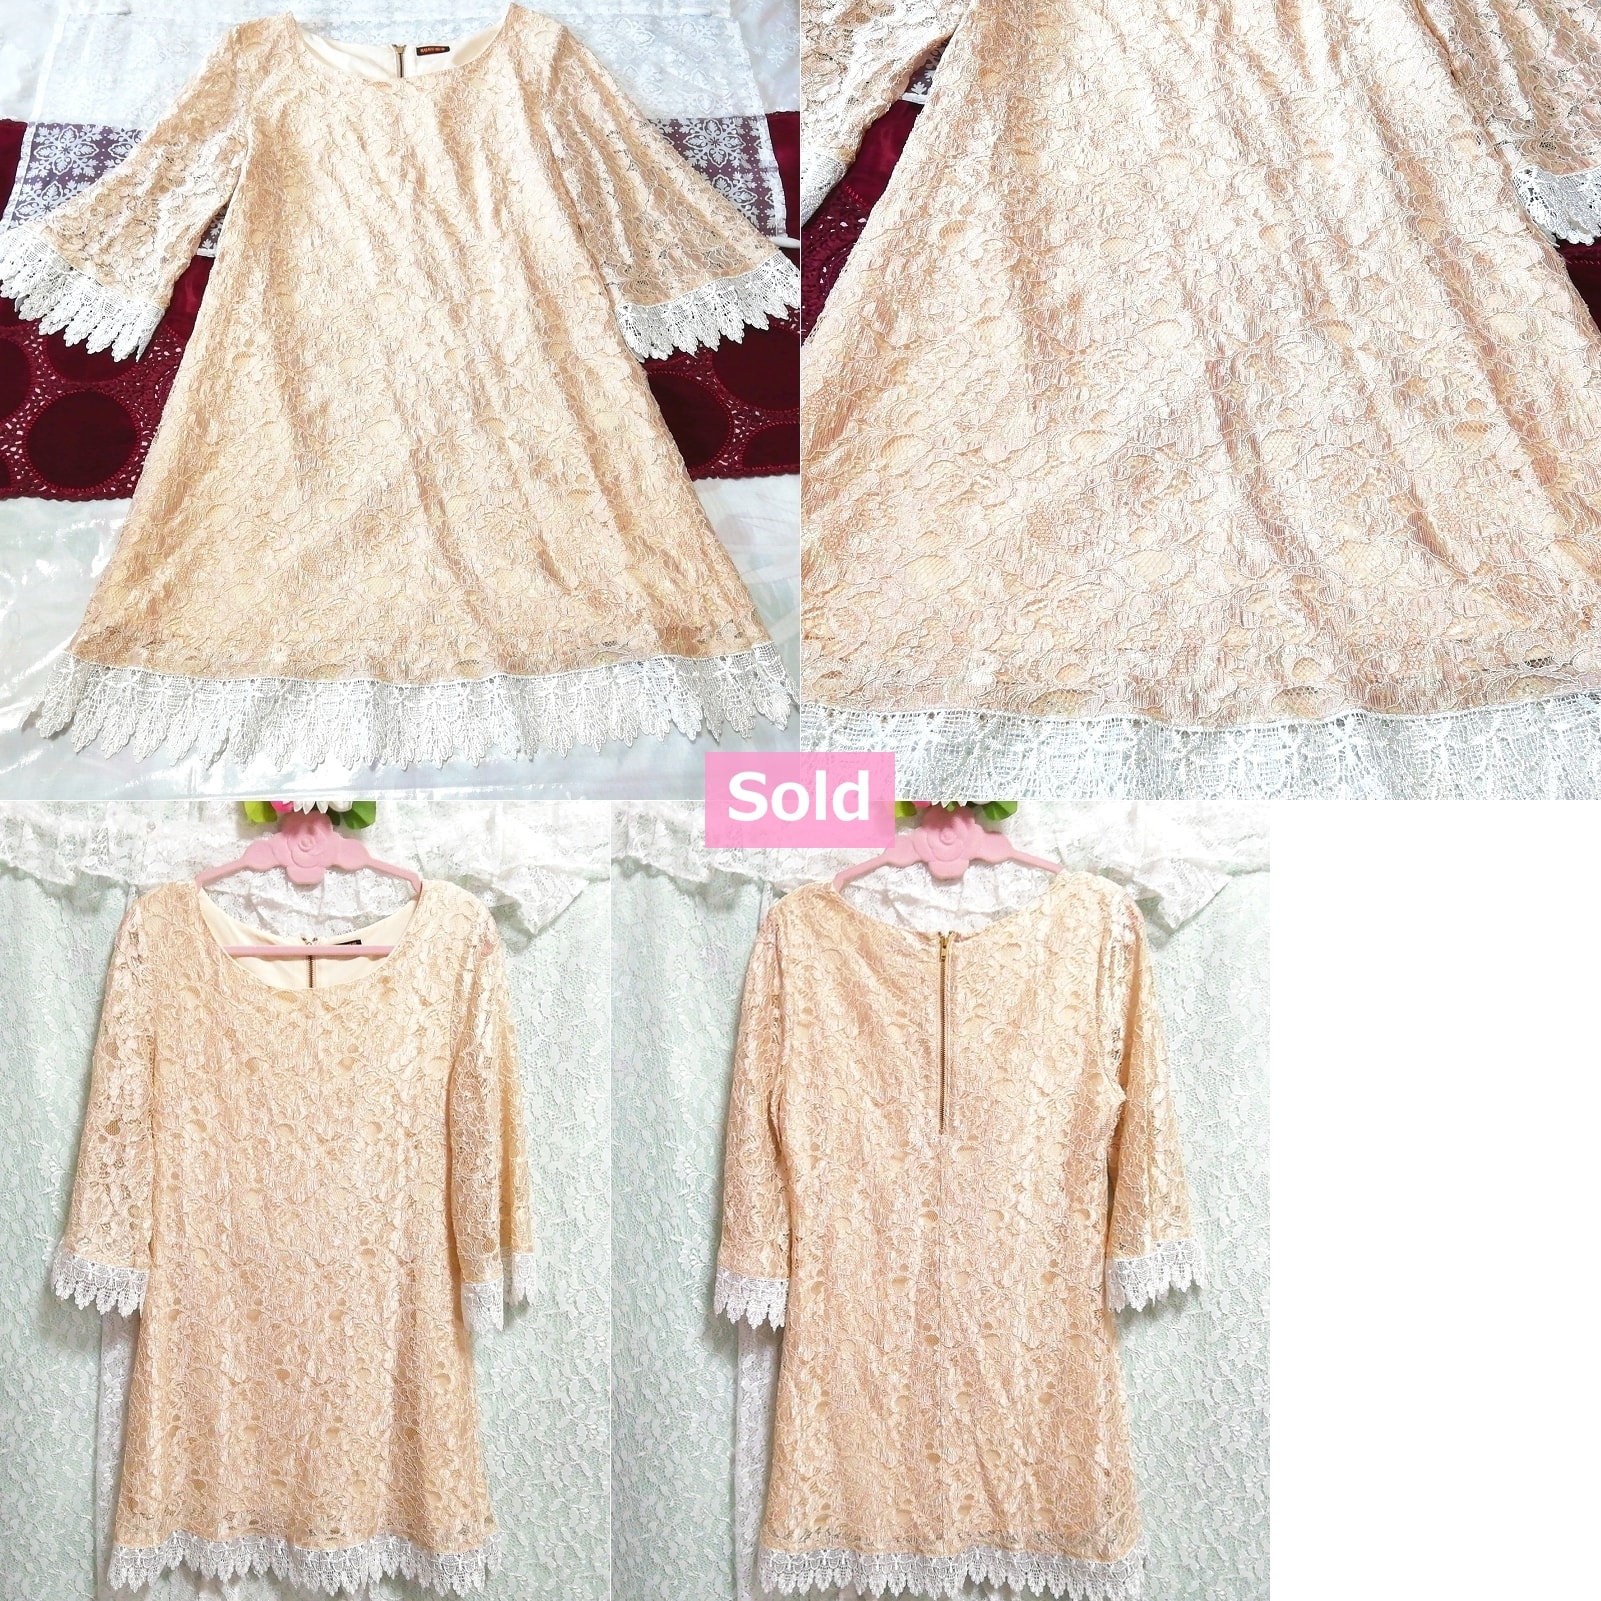 Flax white lace long sleeve long tunic negligee nightgown nightwear dress, tunic, long sleeve, m size